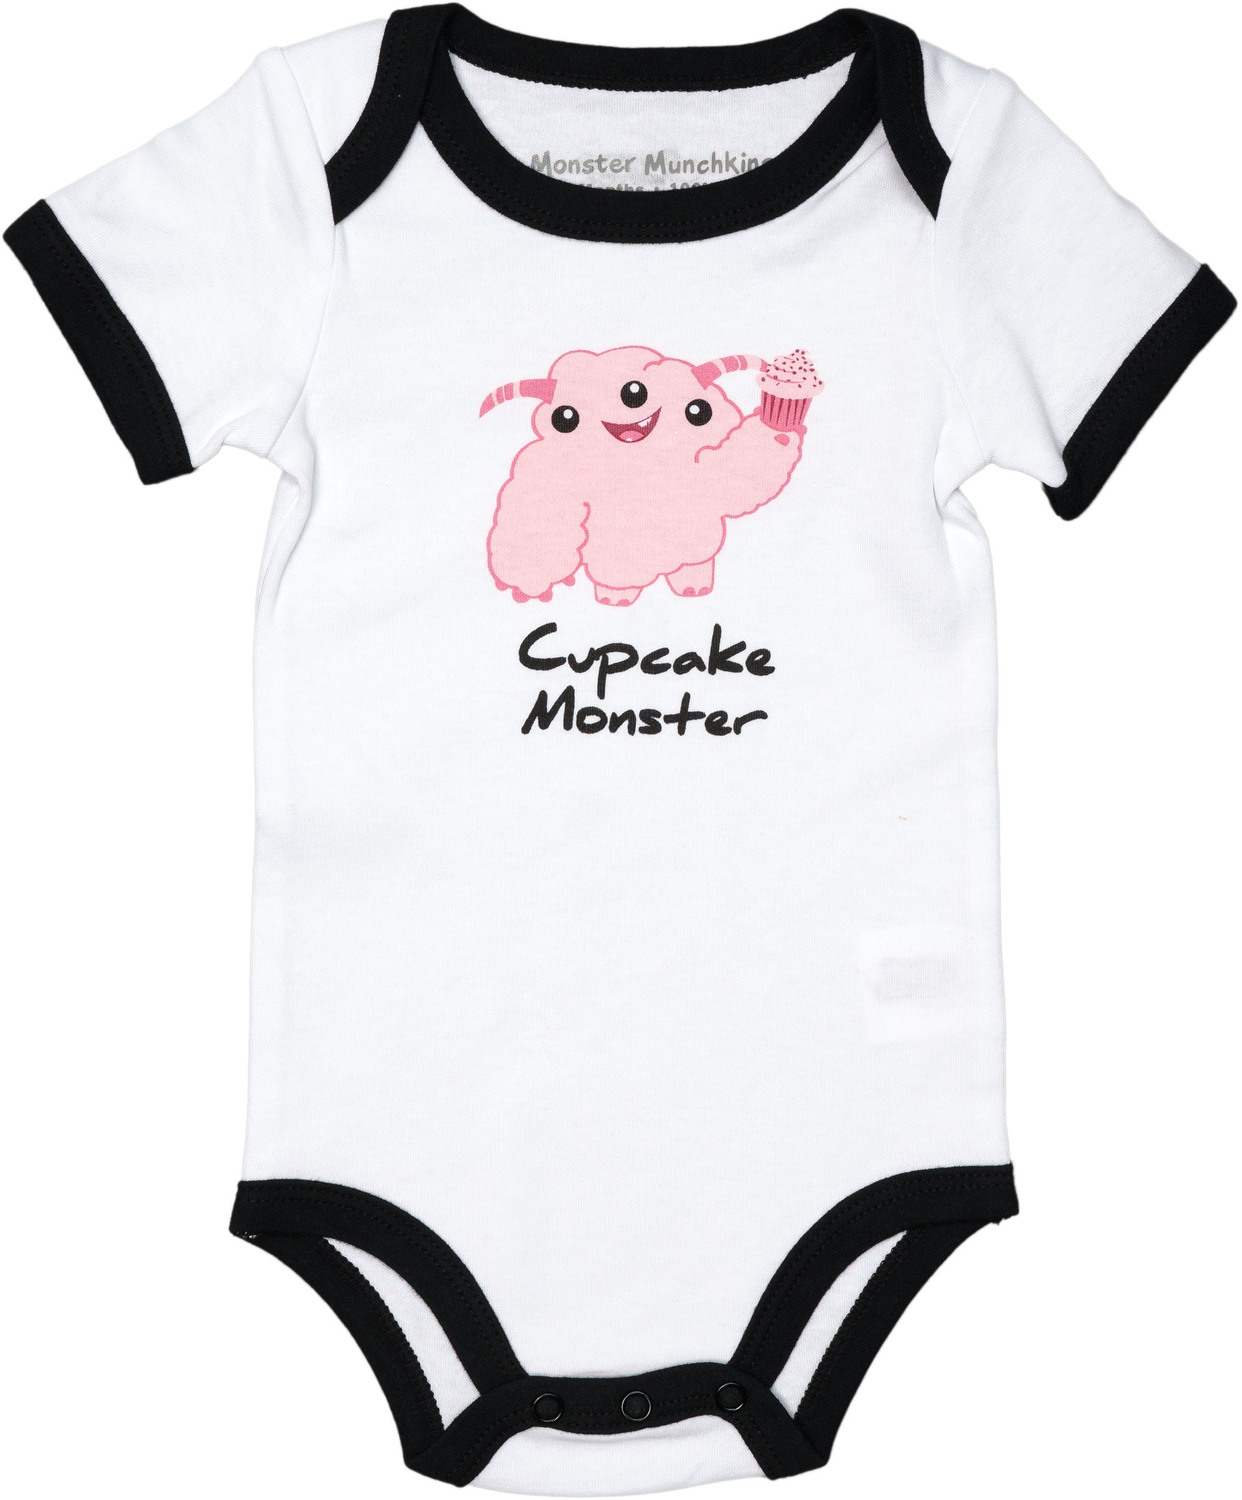 Pink Cupcake Monster by Monster Munchkins - Pink Cupcake Monster - 6-12 Months
Bodysuit